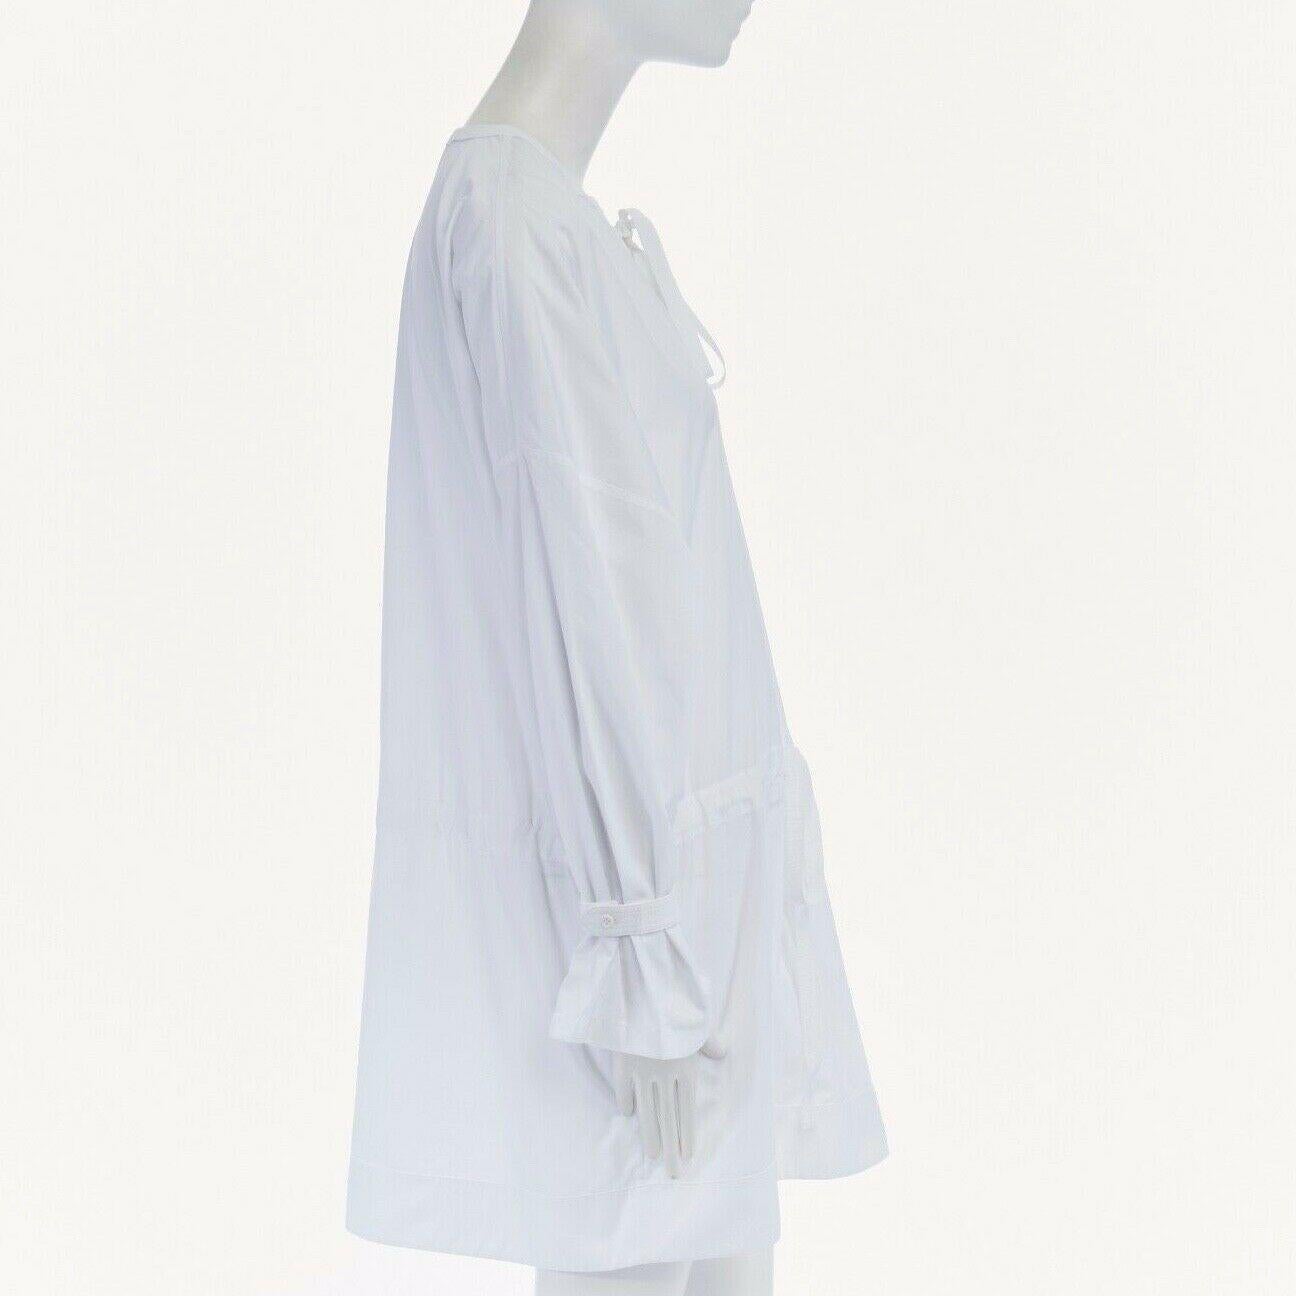 Women's new ALEXANDER MCQUEEN white cotton lace front tunic dress FR38 US8 UK10 M